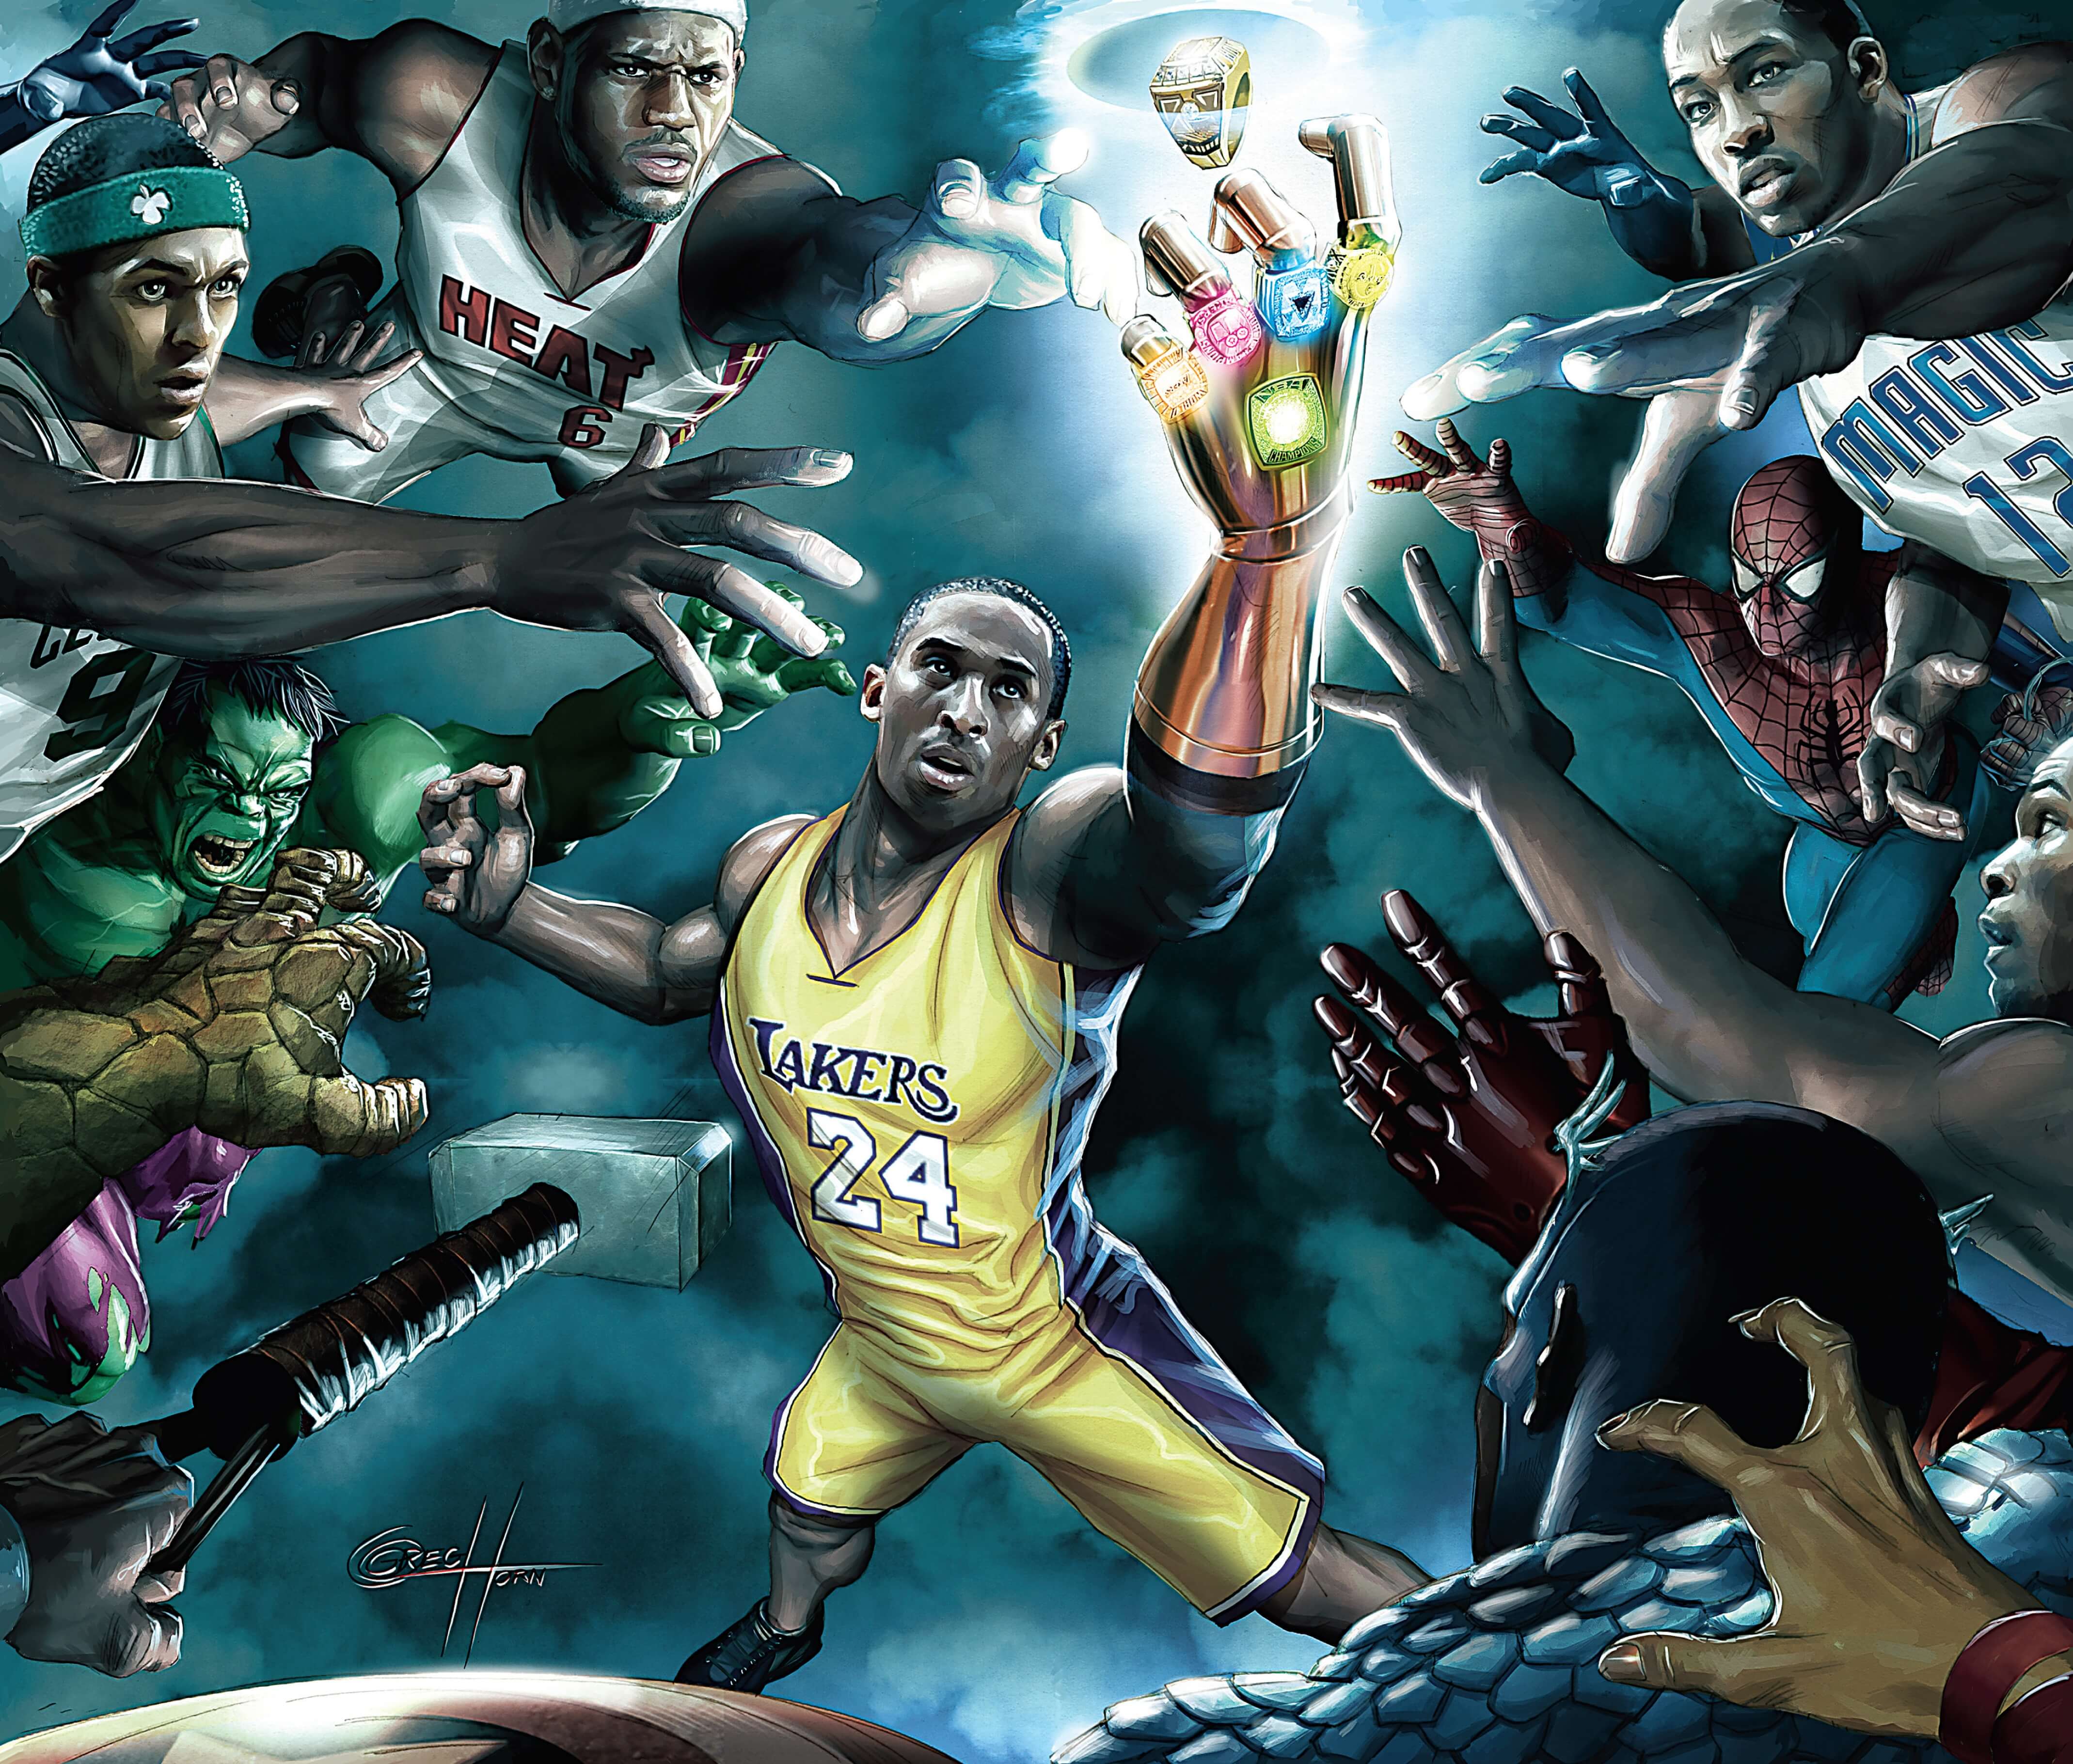 2010 -- ESPN The Magazine -- NBA Preview